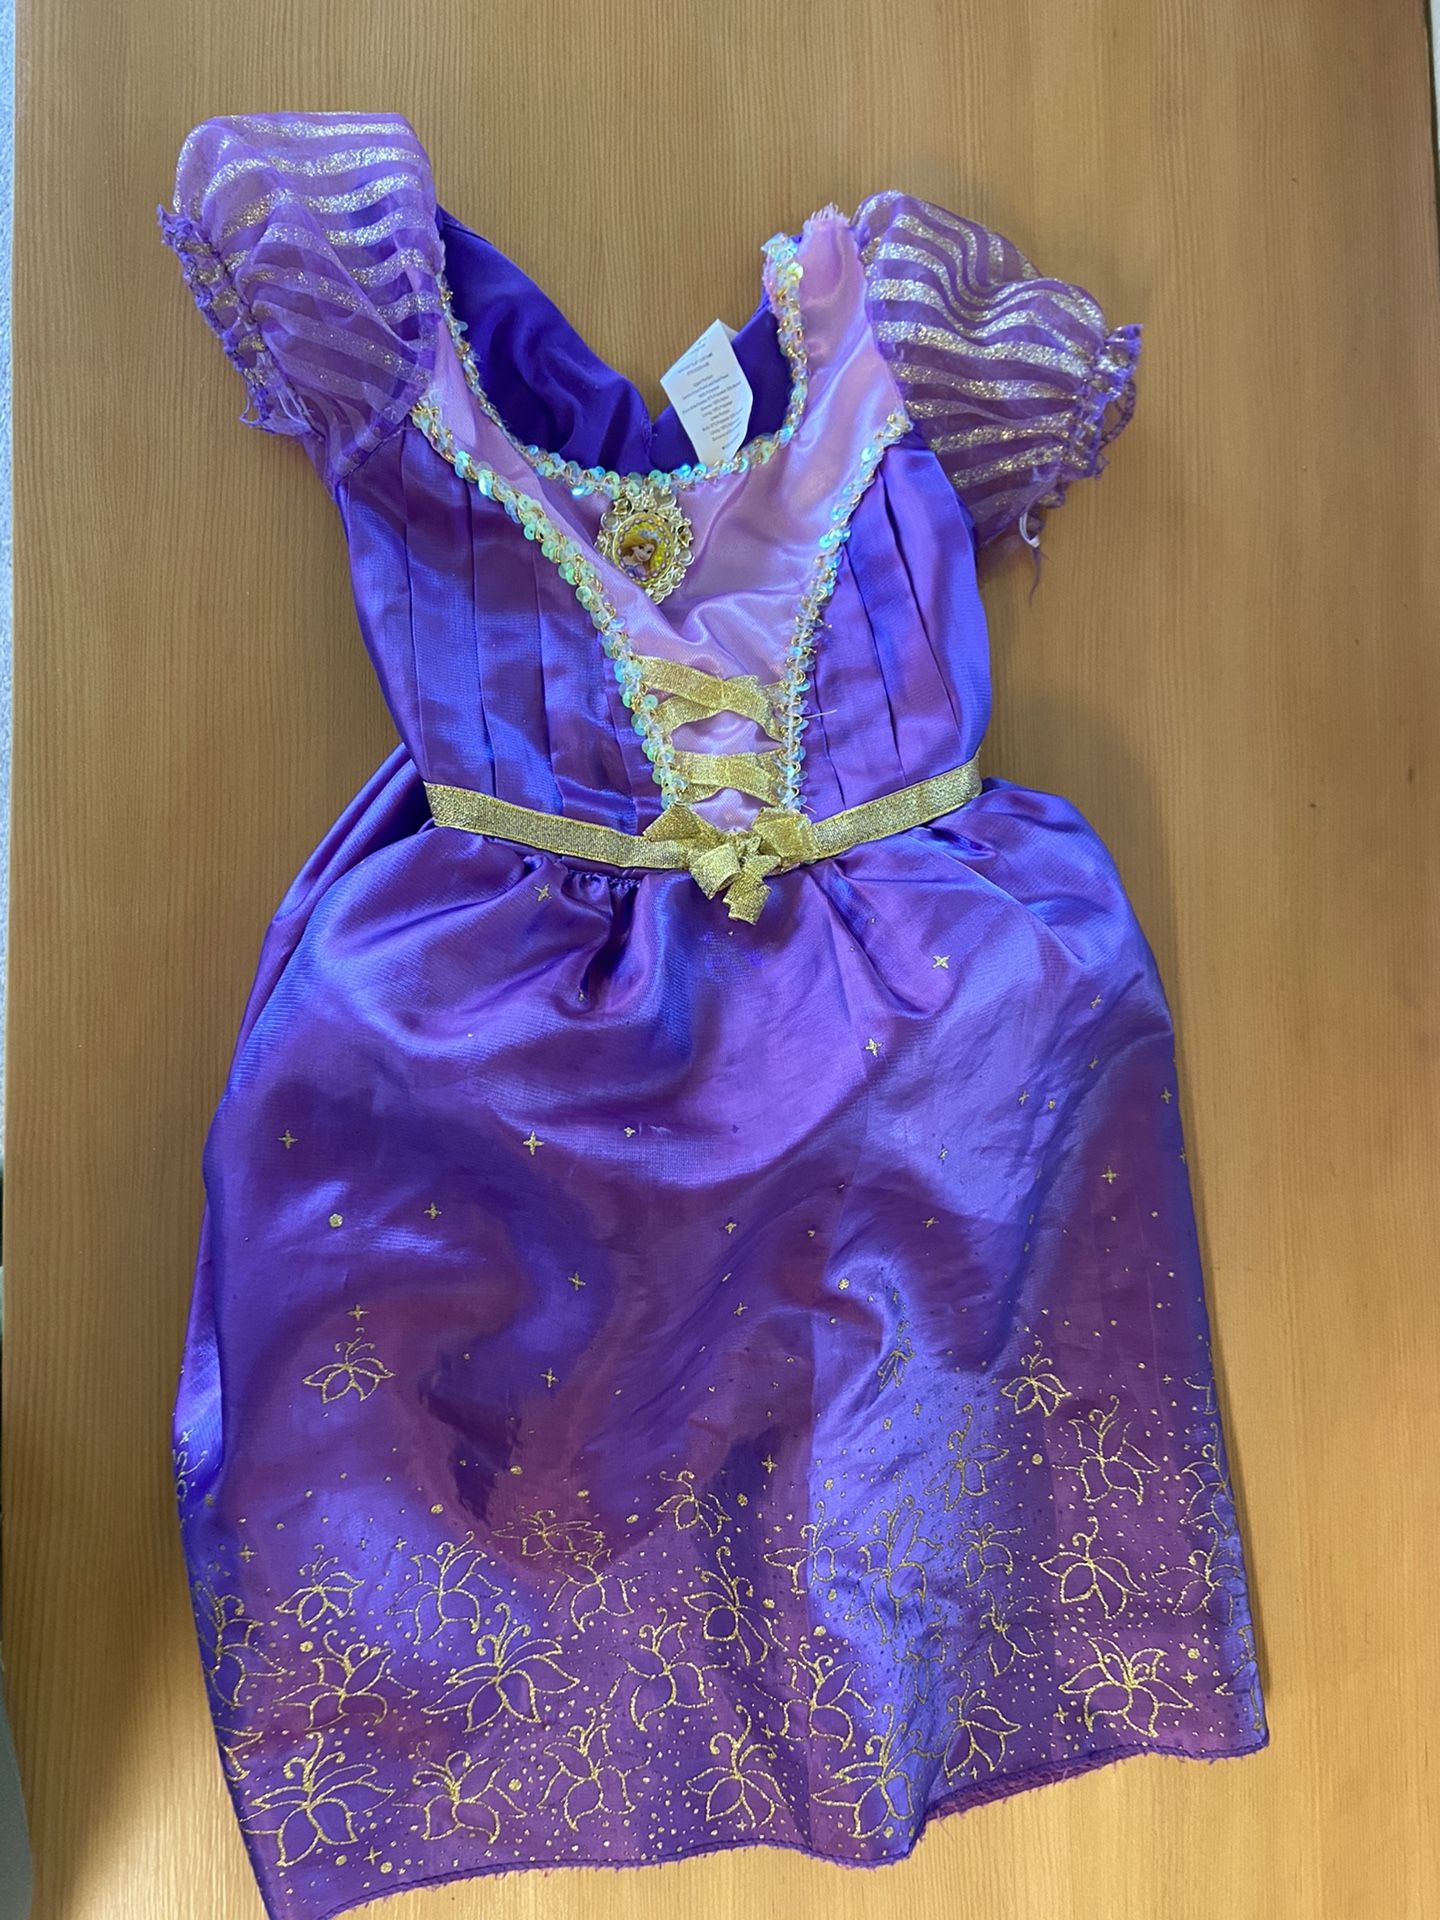 Disney Princess Rapunzel Costume